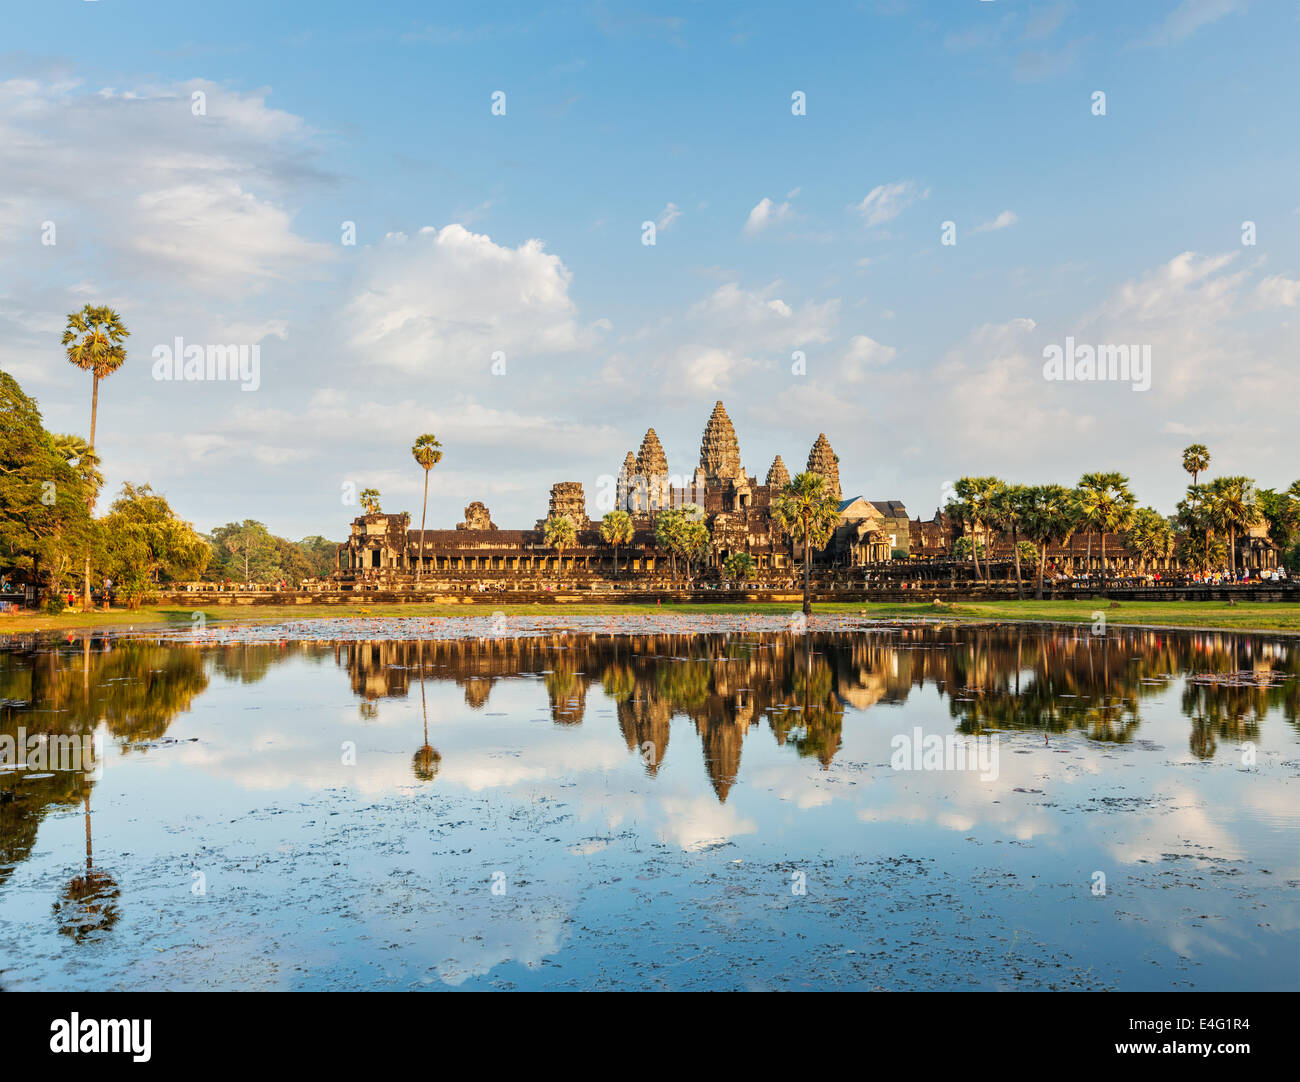 Cambodia landmark Angkor Wat with reflection in water Stock Photo